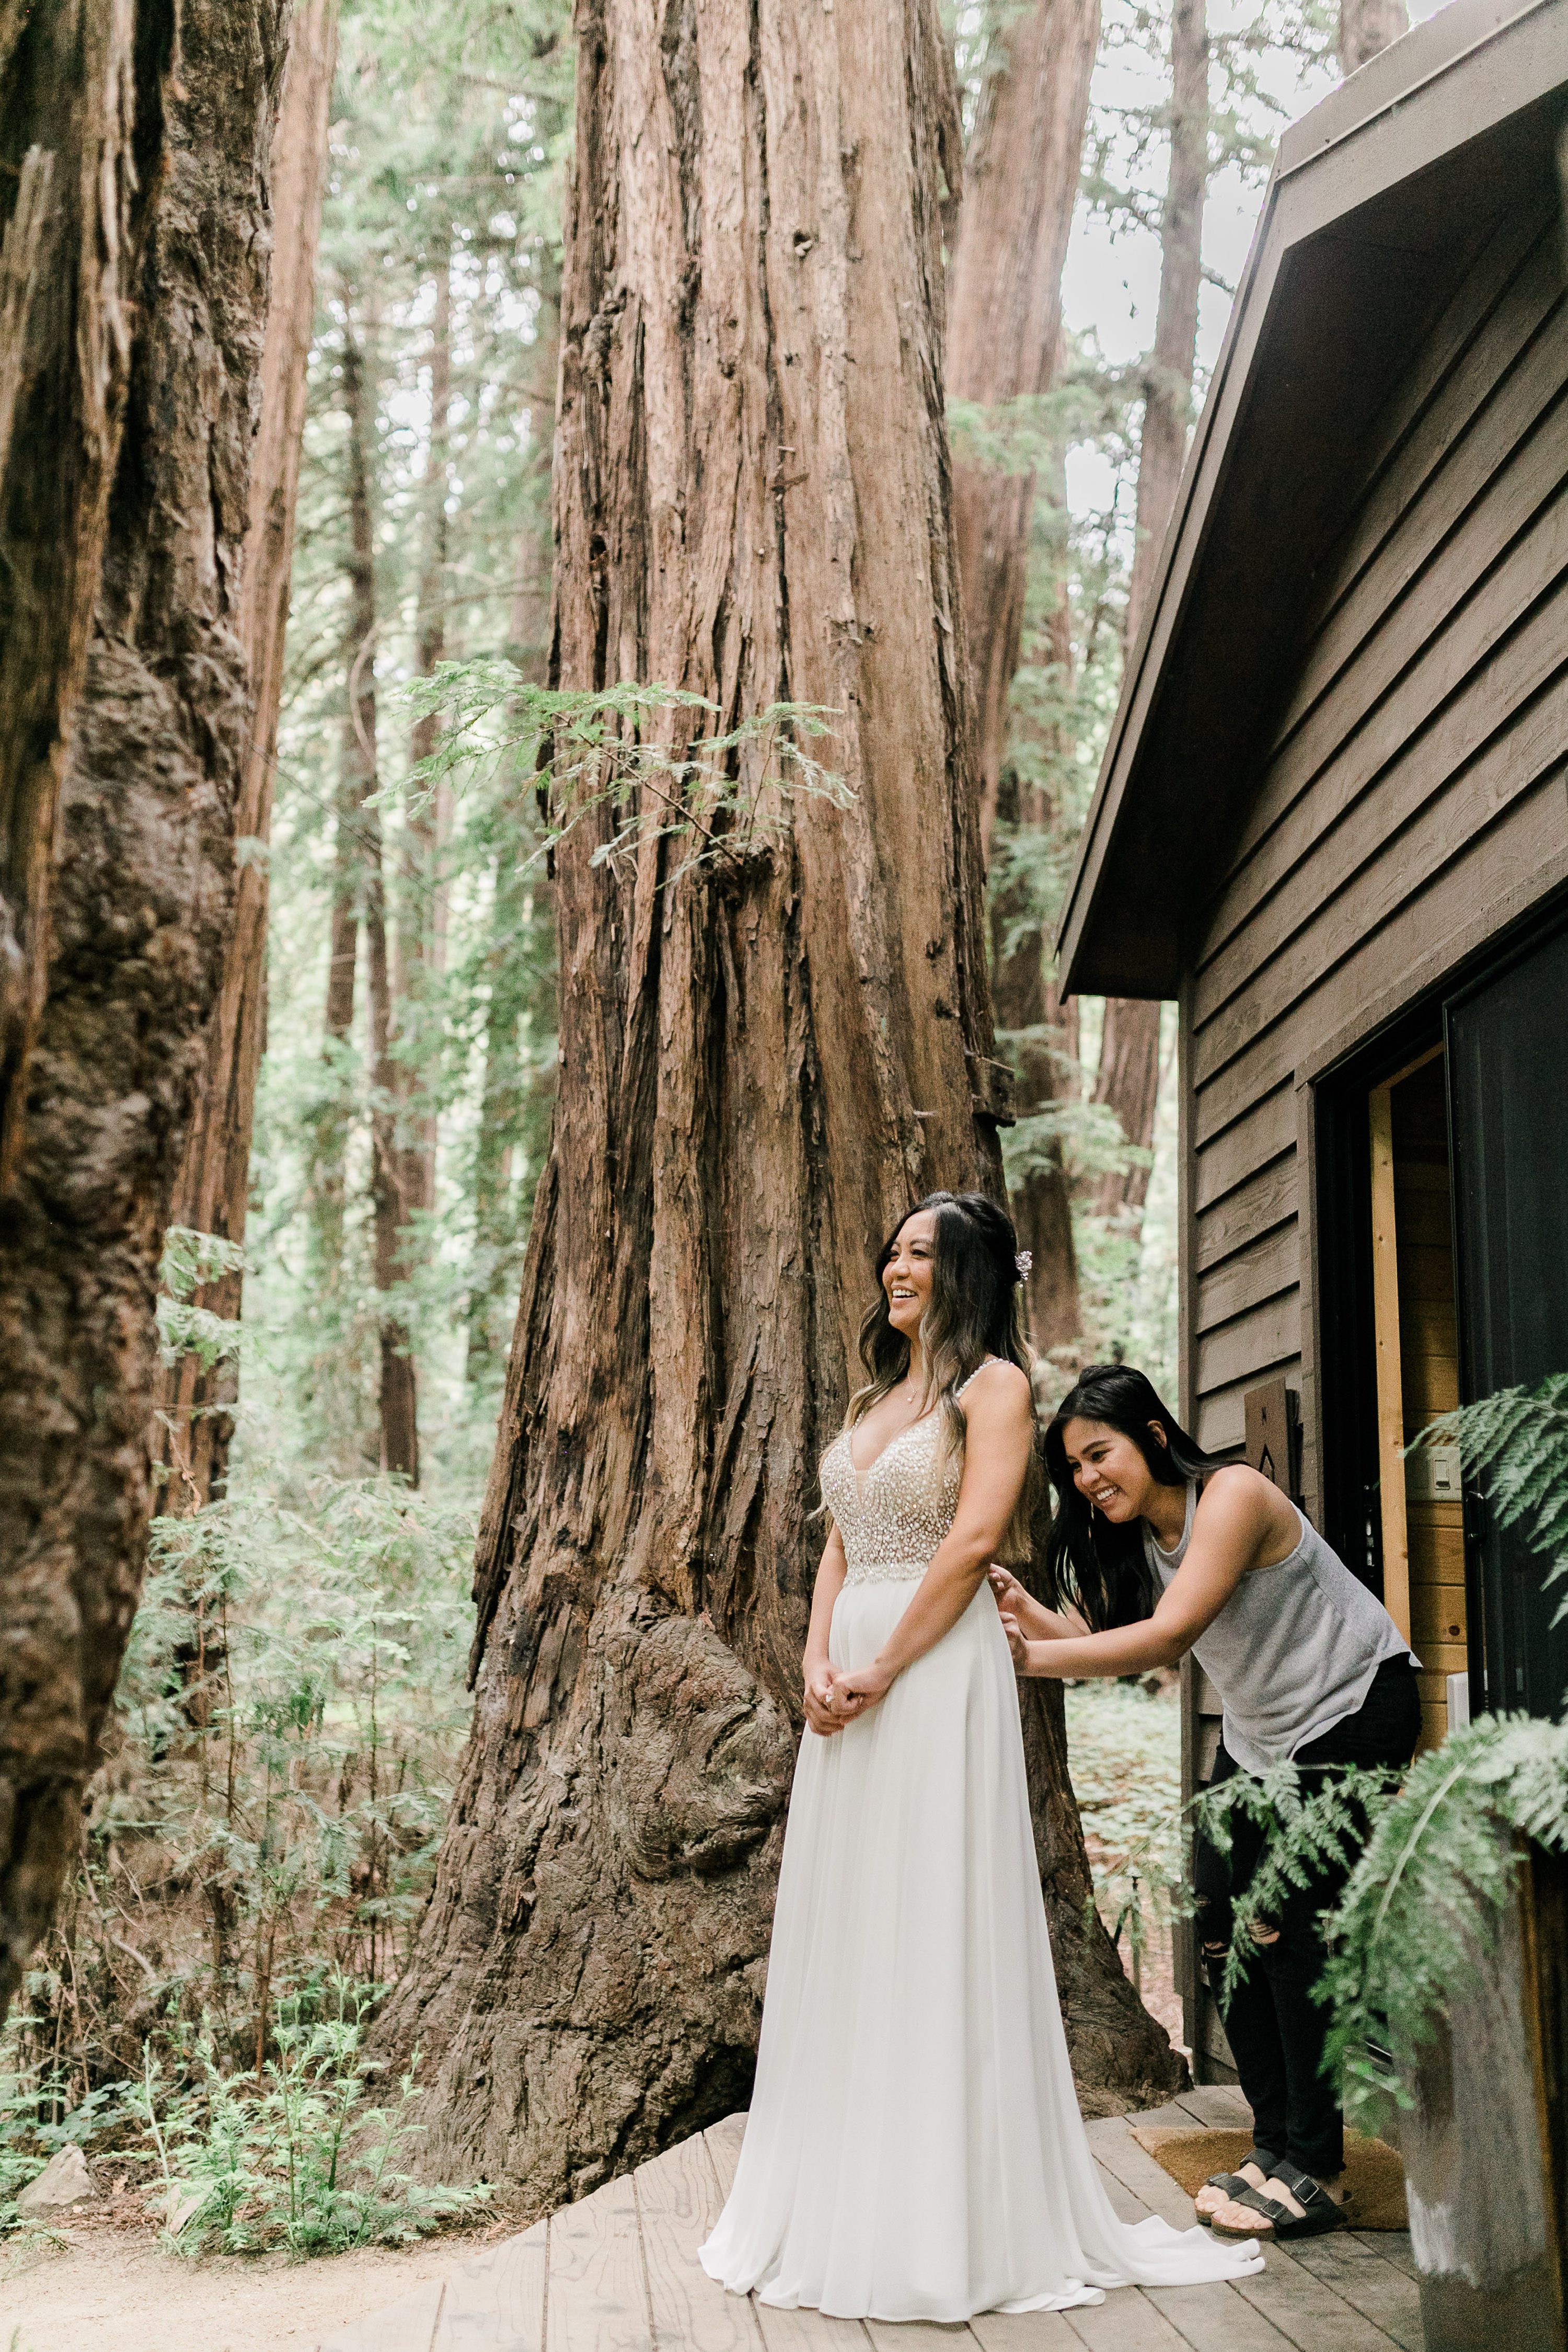 Destination Elopement Photographer,Glen Oaks Big Sur Wedding,glen oaks cabin,glen oaks north cabin